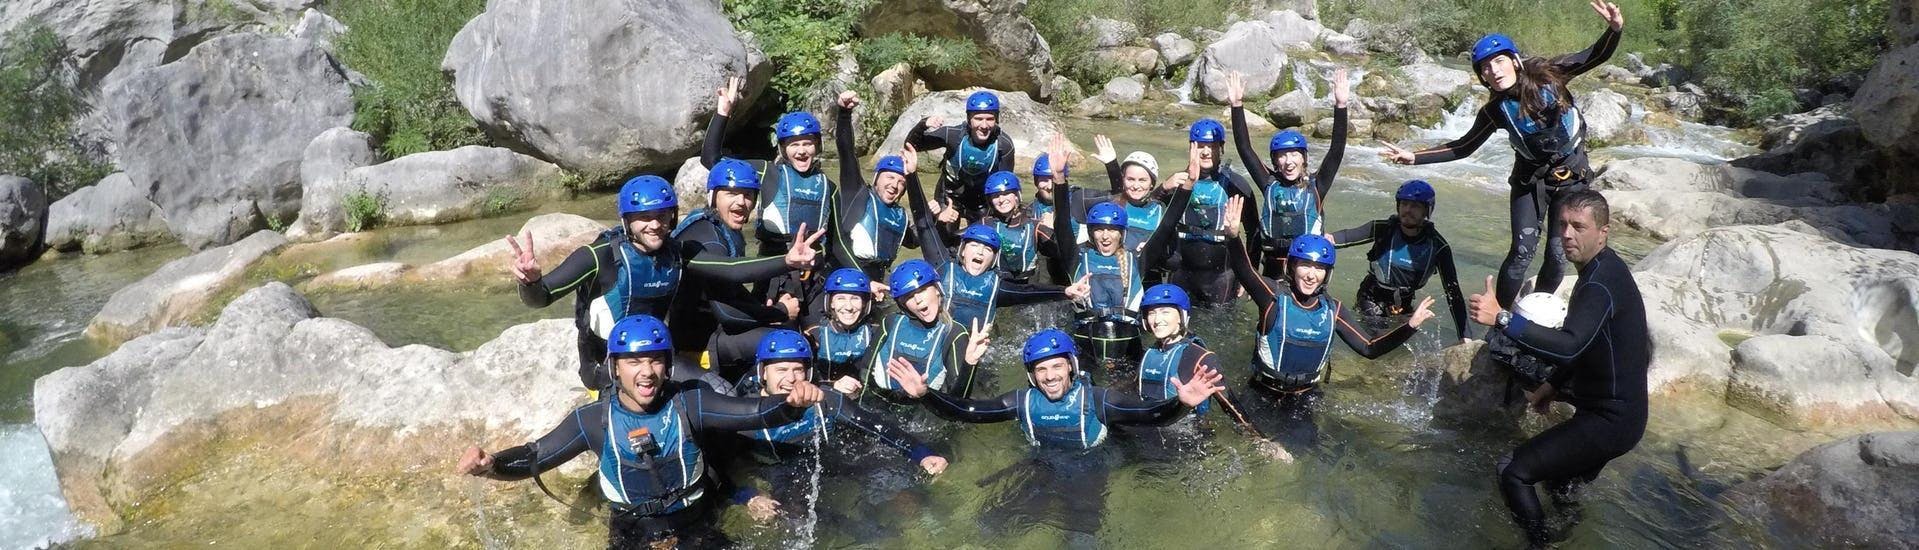 Freunden machen Canyoning in der Cetina bei Omiš - Basic Tour mit Dalmare Travel Agency Omiš.